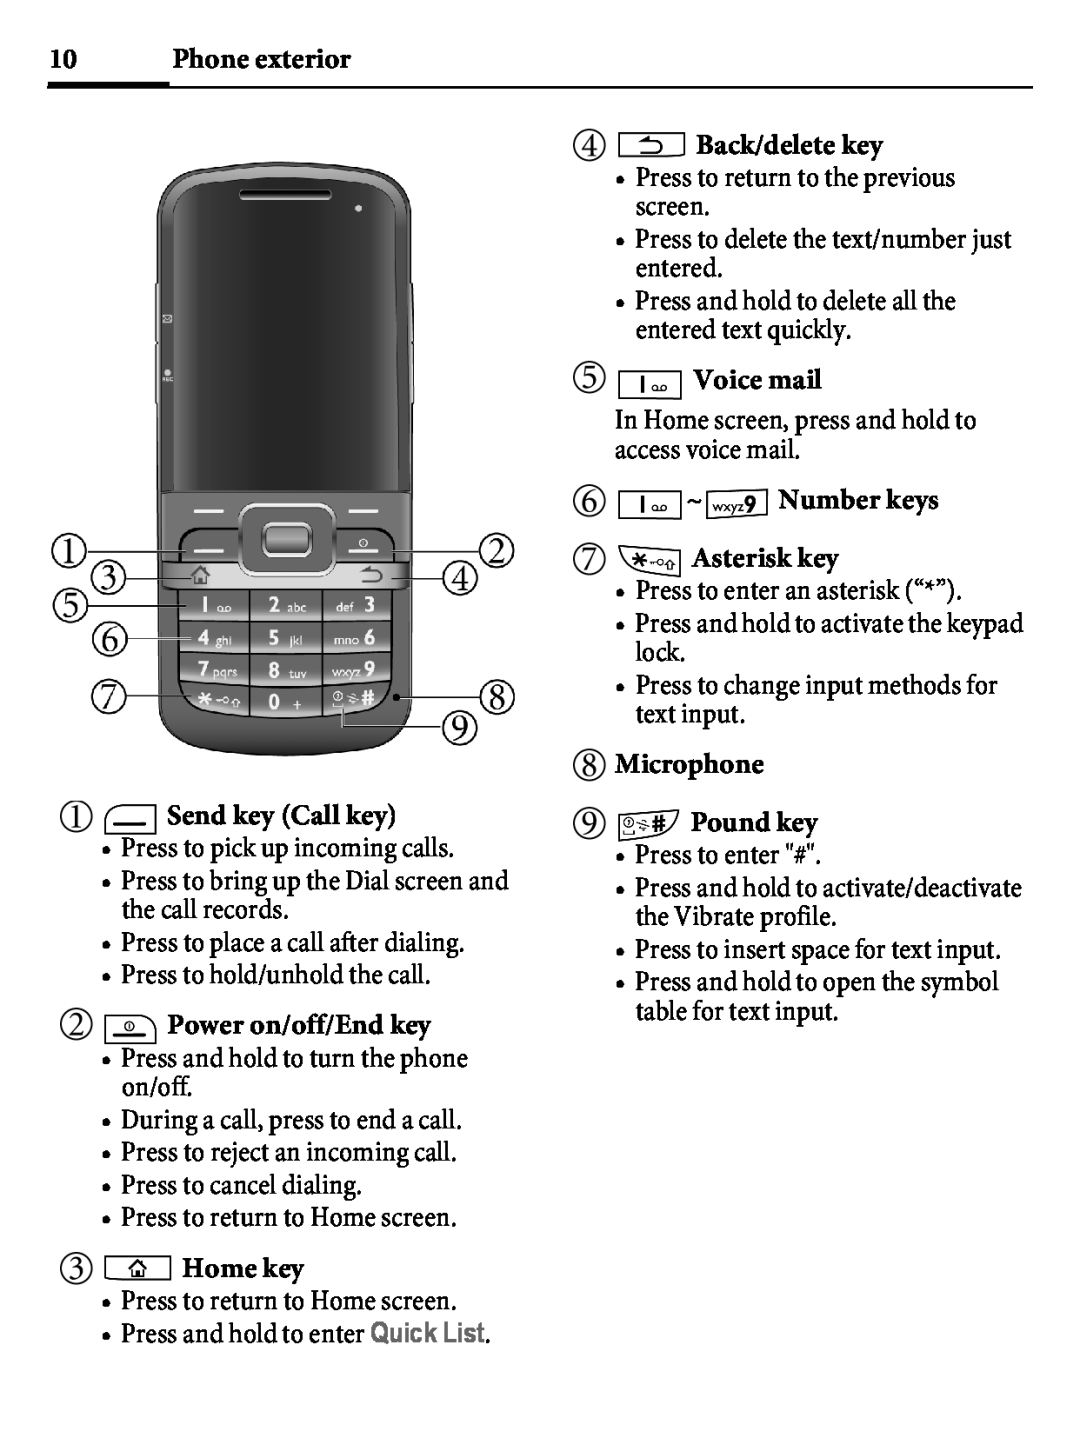 Kyocera E4000 specifications Phone exterior, Send key Call key, Power on/off/End key, Home key, Back/delete key, Voice mail 